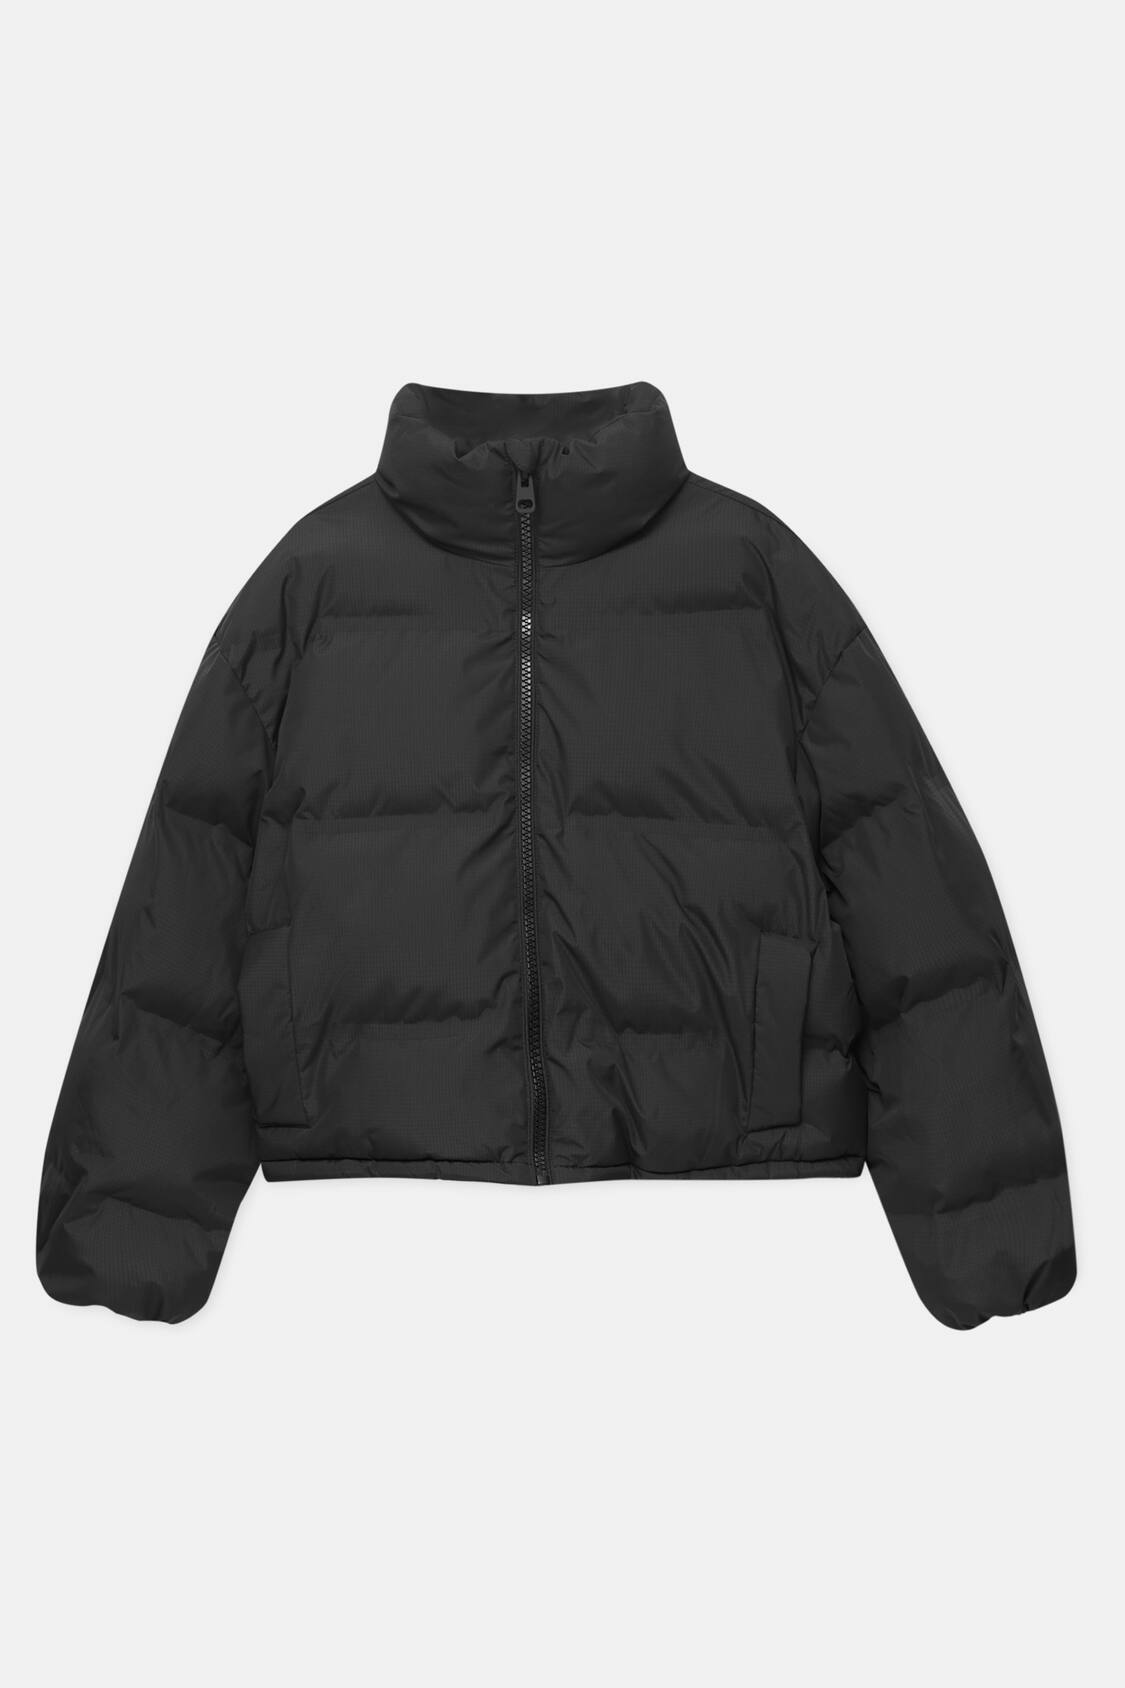 Pull&Bear puffer jacket in gunmetal gray